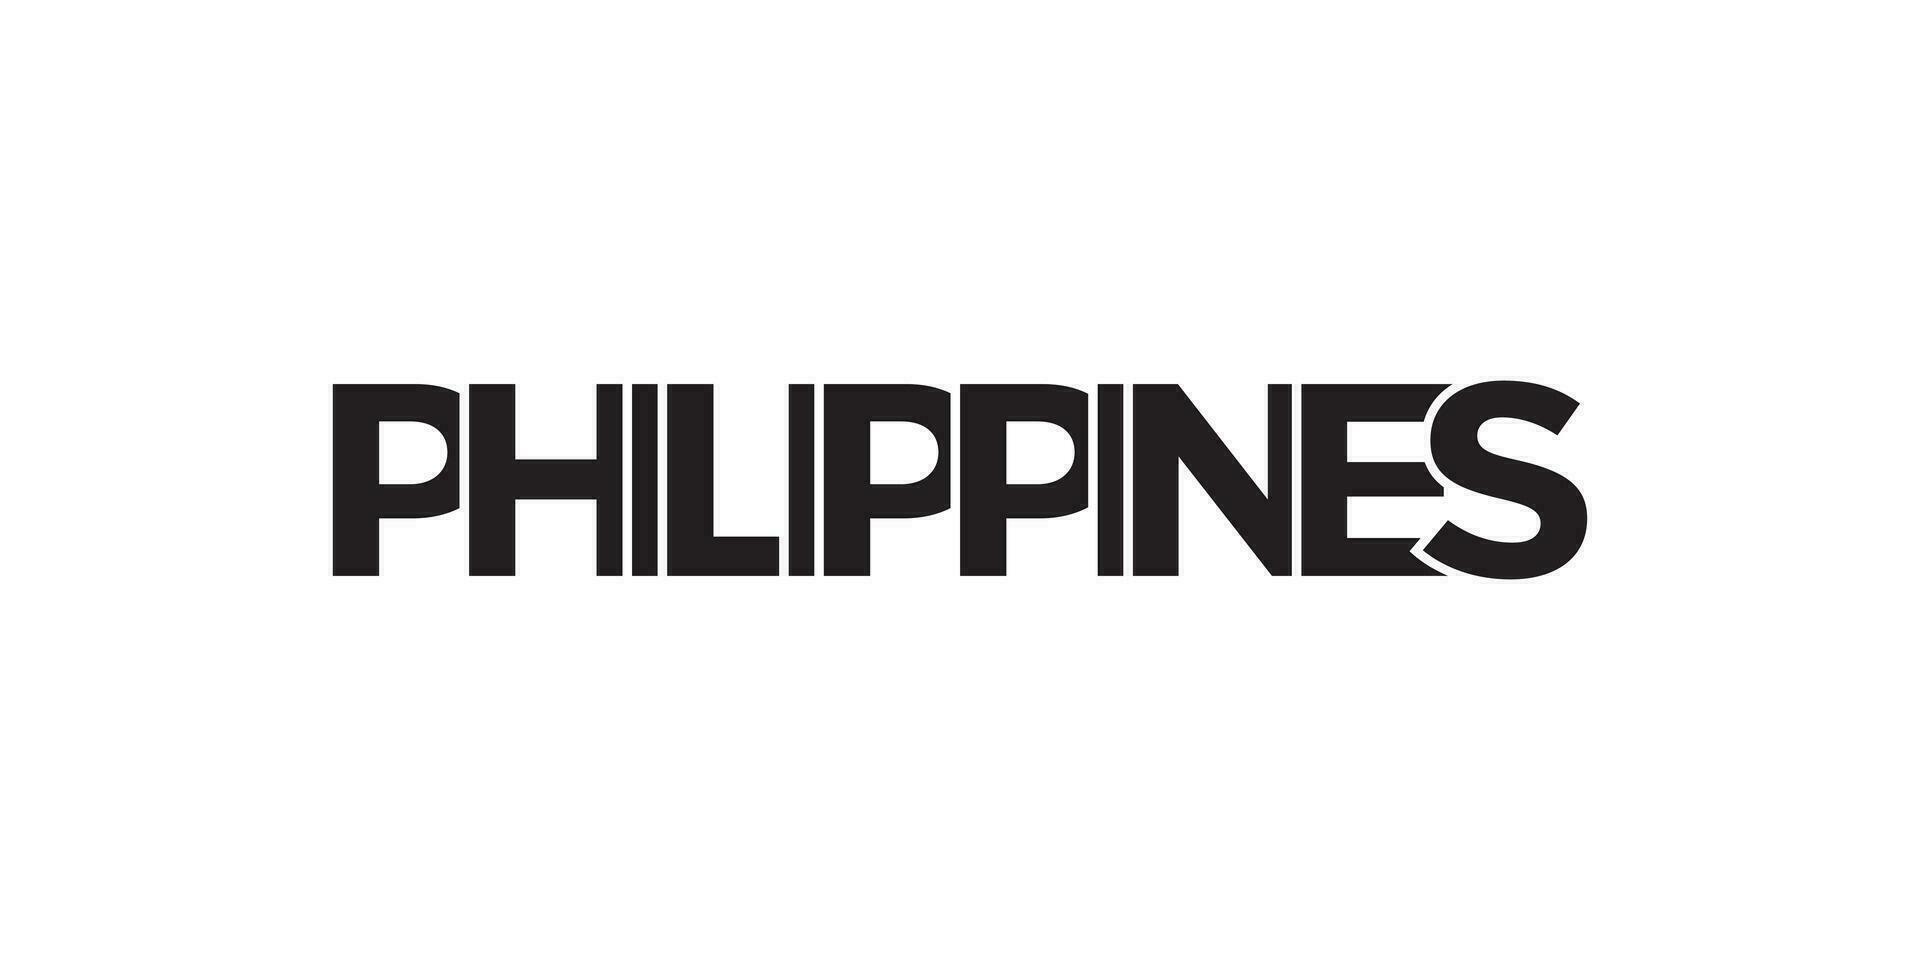 filippinerna emblem. de design funktioner en geometrisk stil, vektor illustration med djärv typografi i en modern font. de grafisk slogan text.